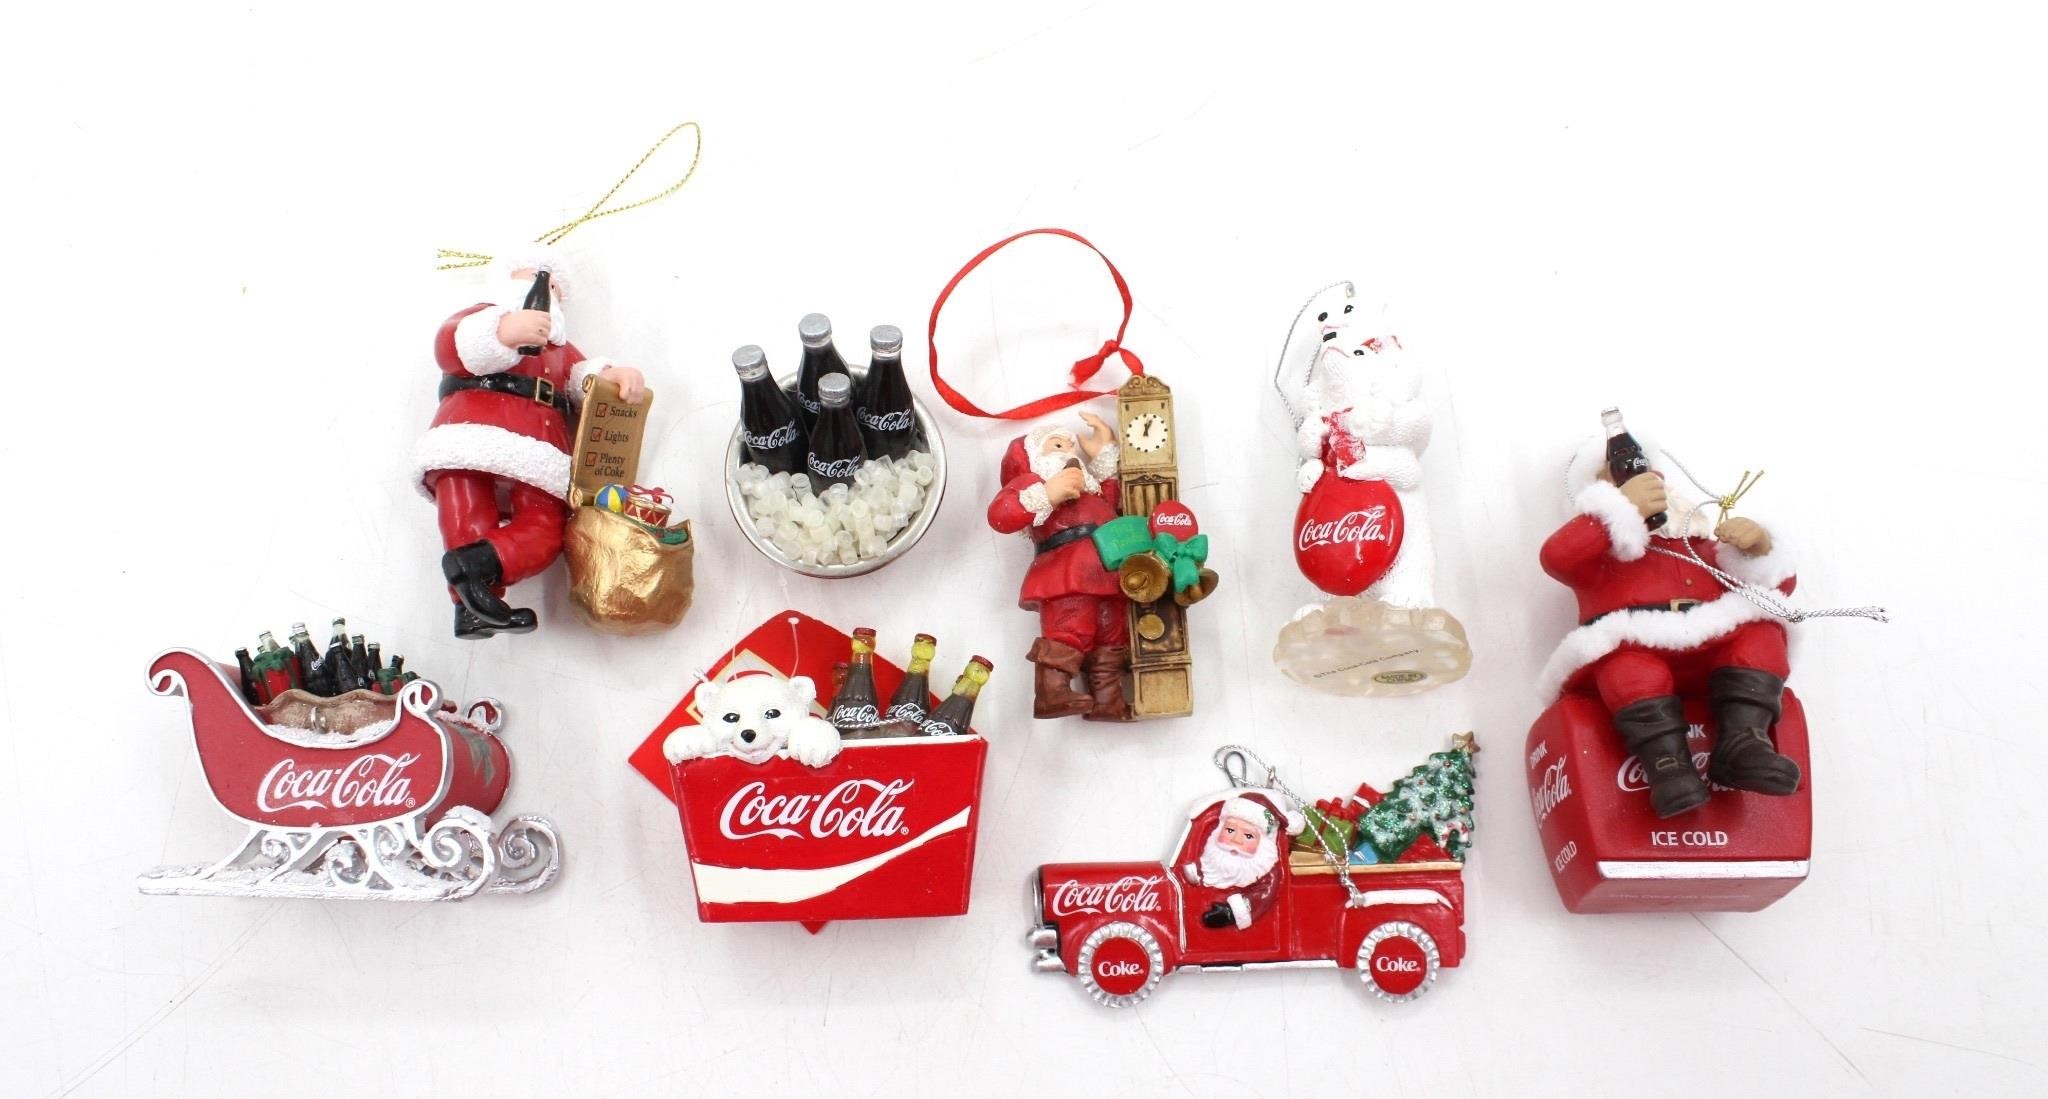 (8) Coca-Cola Christmas Ornament Collection Adler